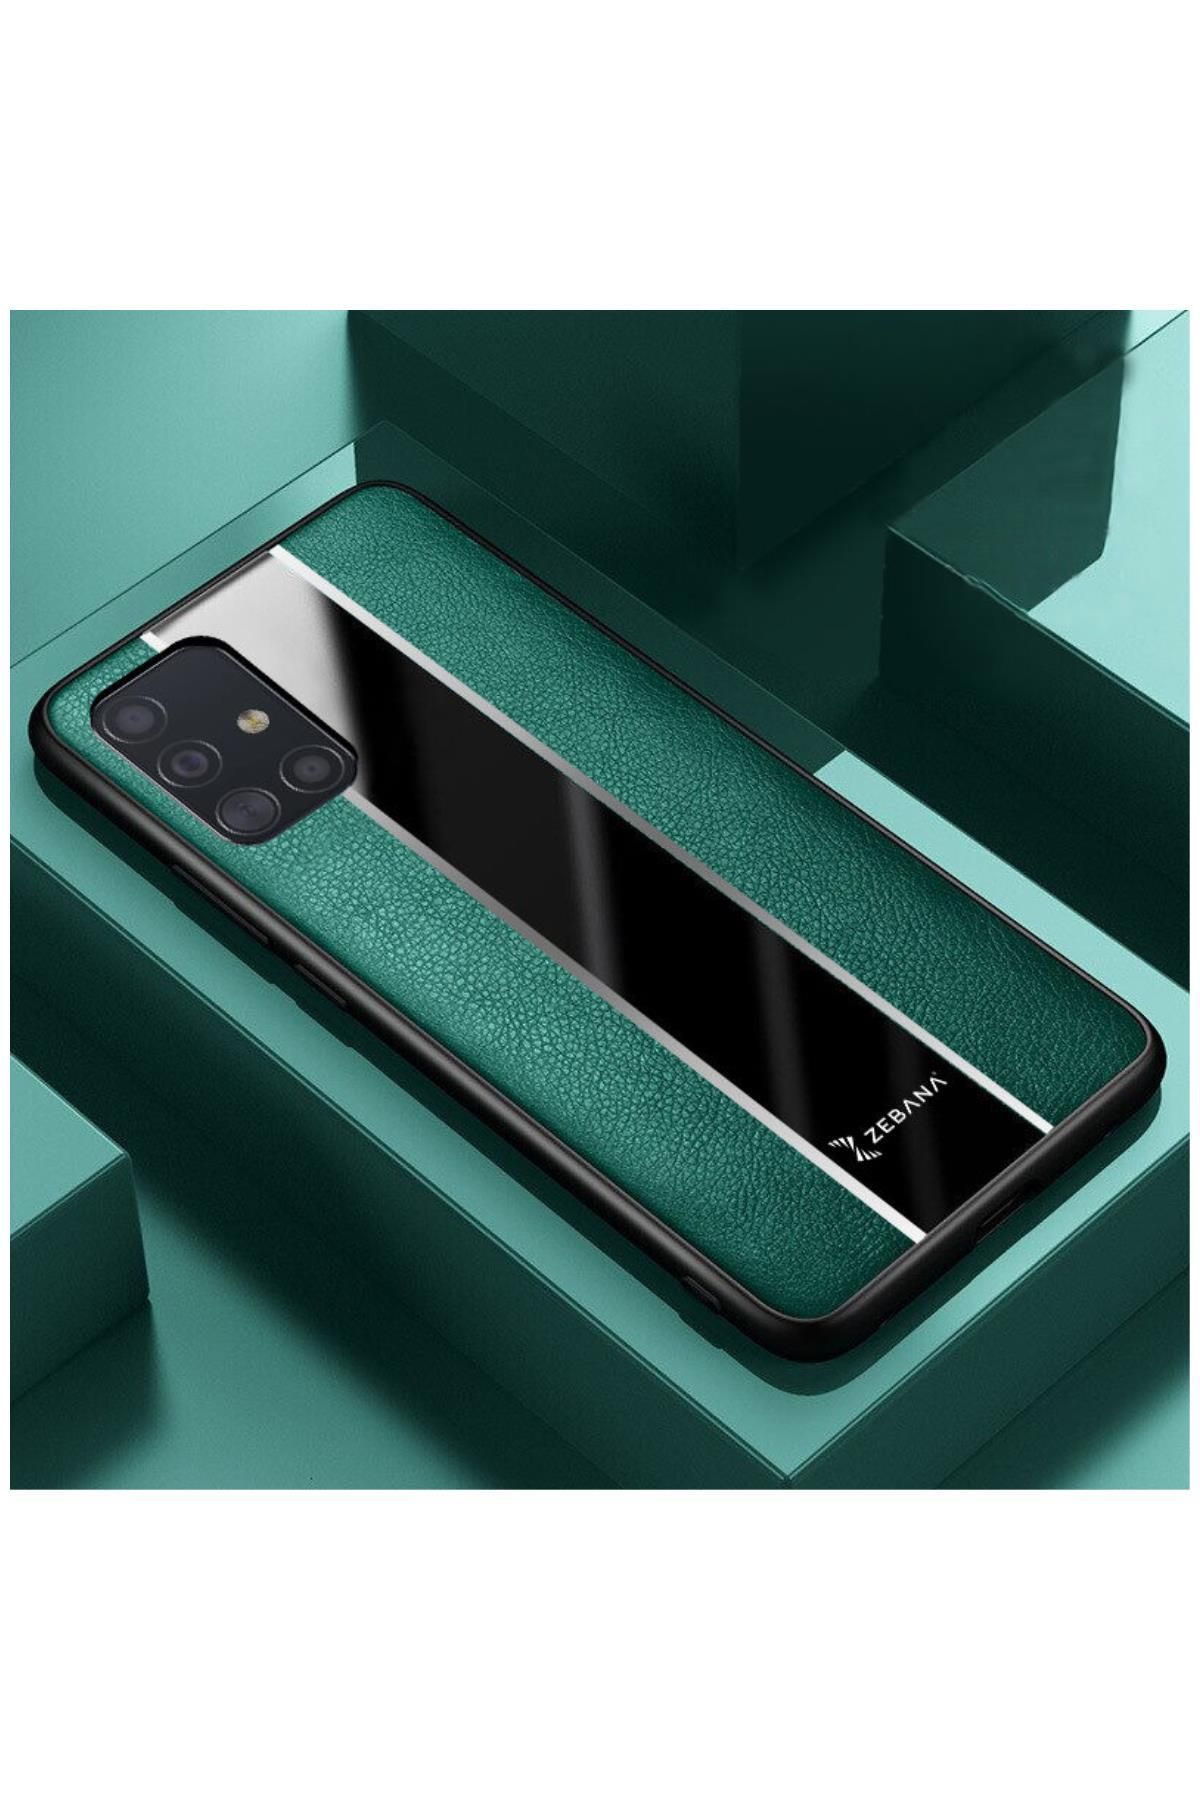 Dara Aksesuar Samsung Galaxy M31s Uyumlu Kılıf Zebana Premium Deri Kılıf Yeşil